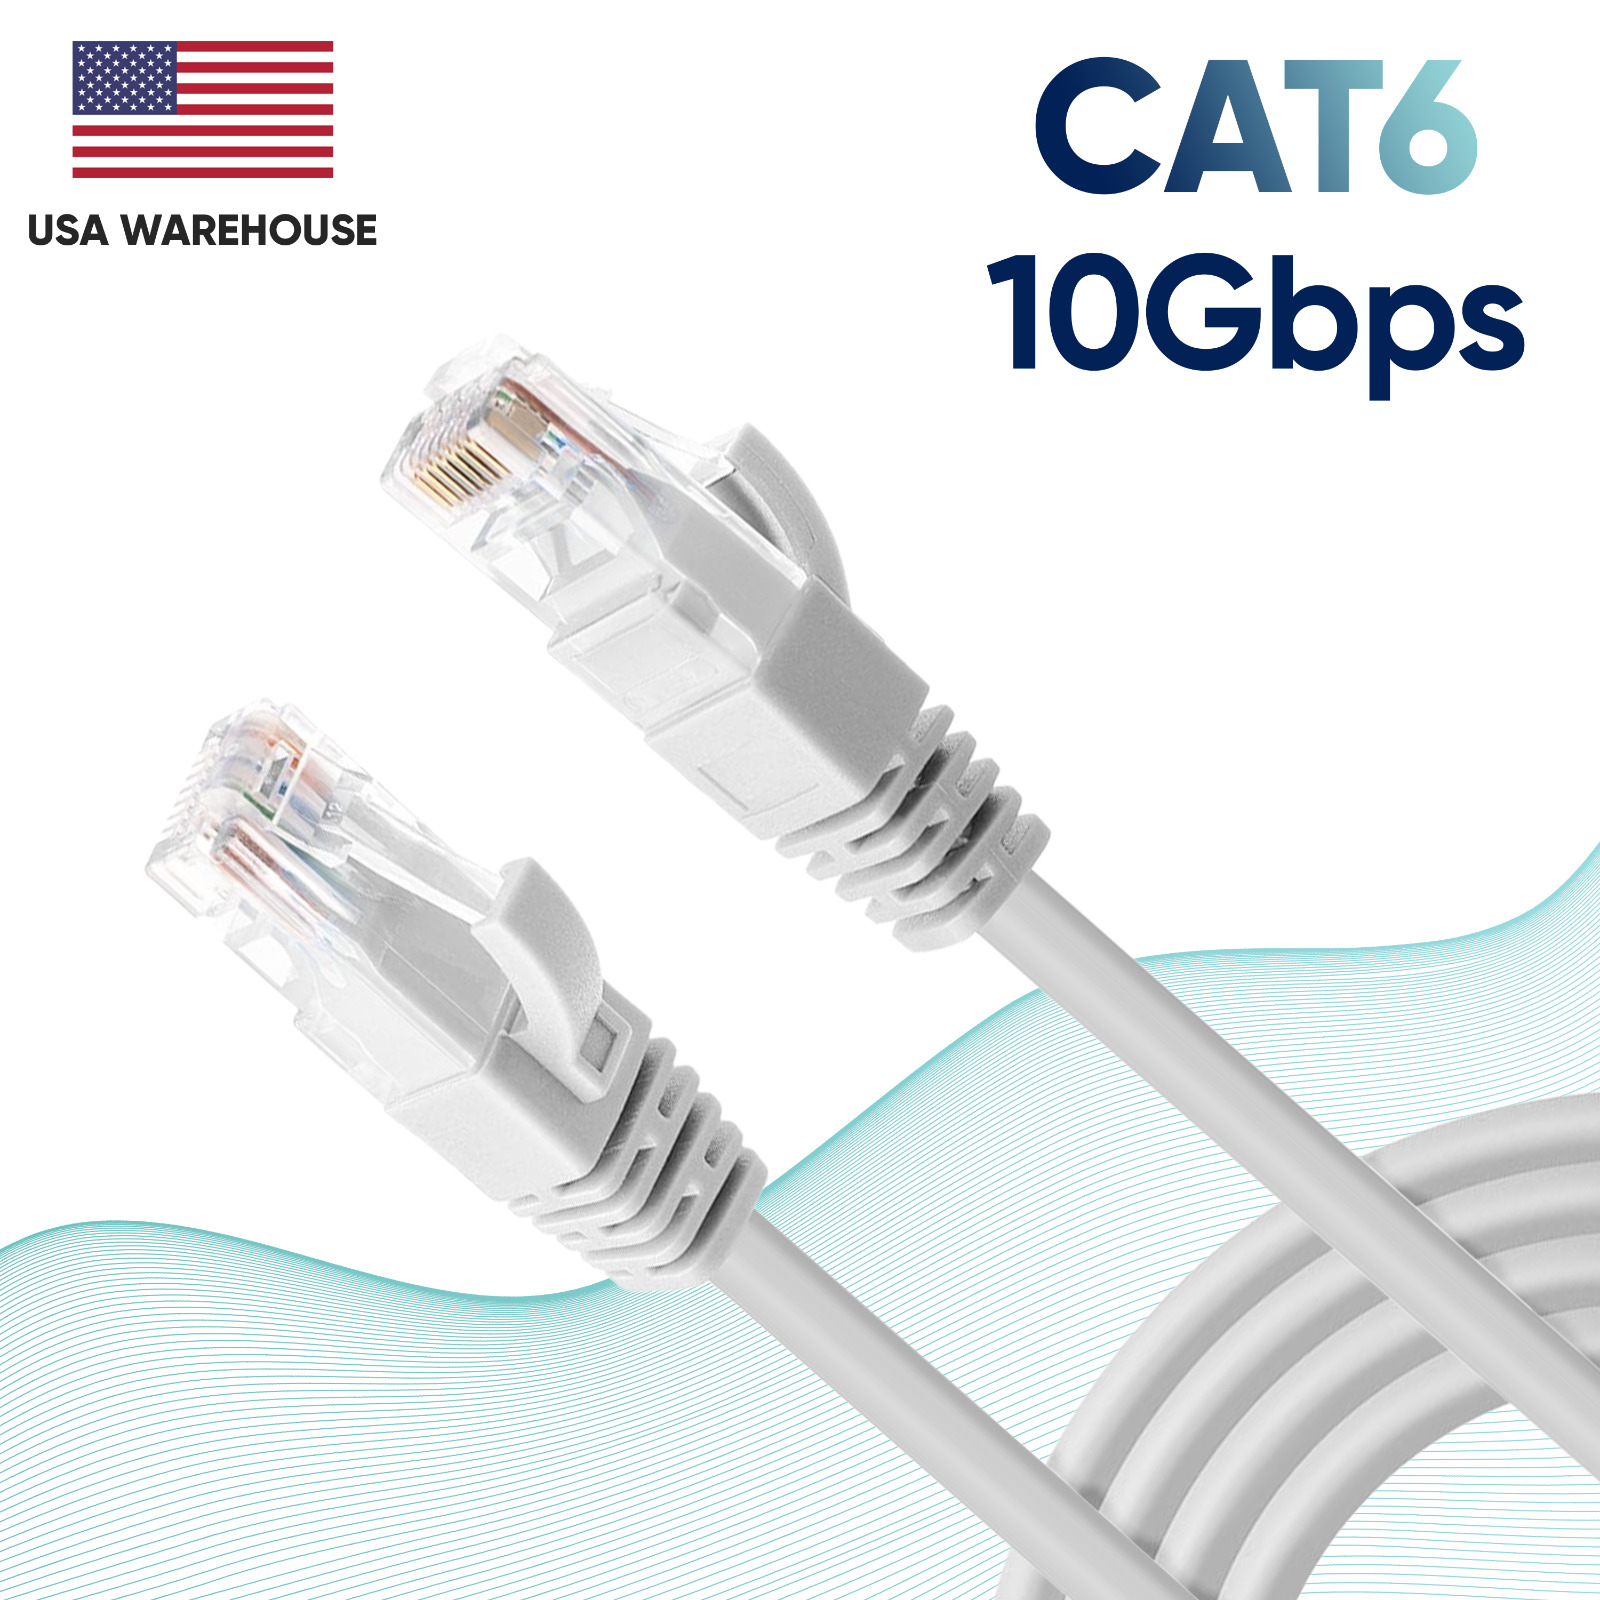 CAT6 Ethernet Internet LAN Cable Network 1.5 3 5 7 10 15 25 30 50 75 100 200 Lot